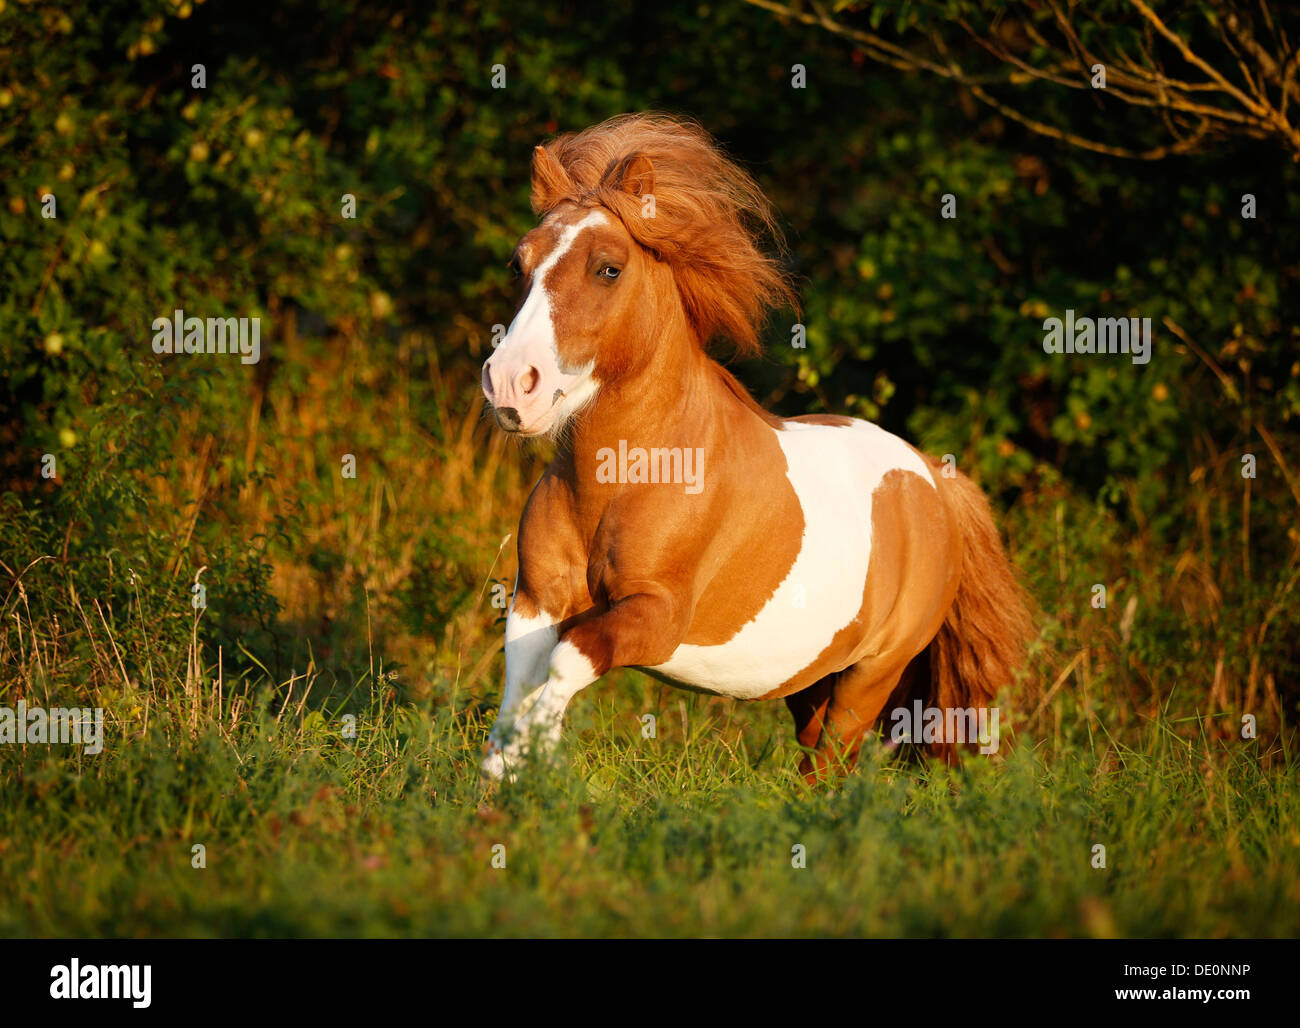 Shetland Pony, skewbald horse, galloping across a meadow Stock Photo